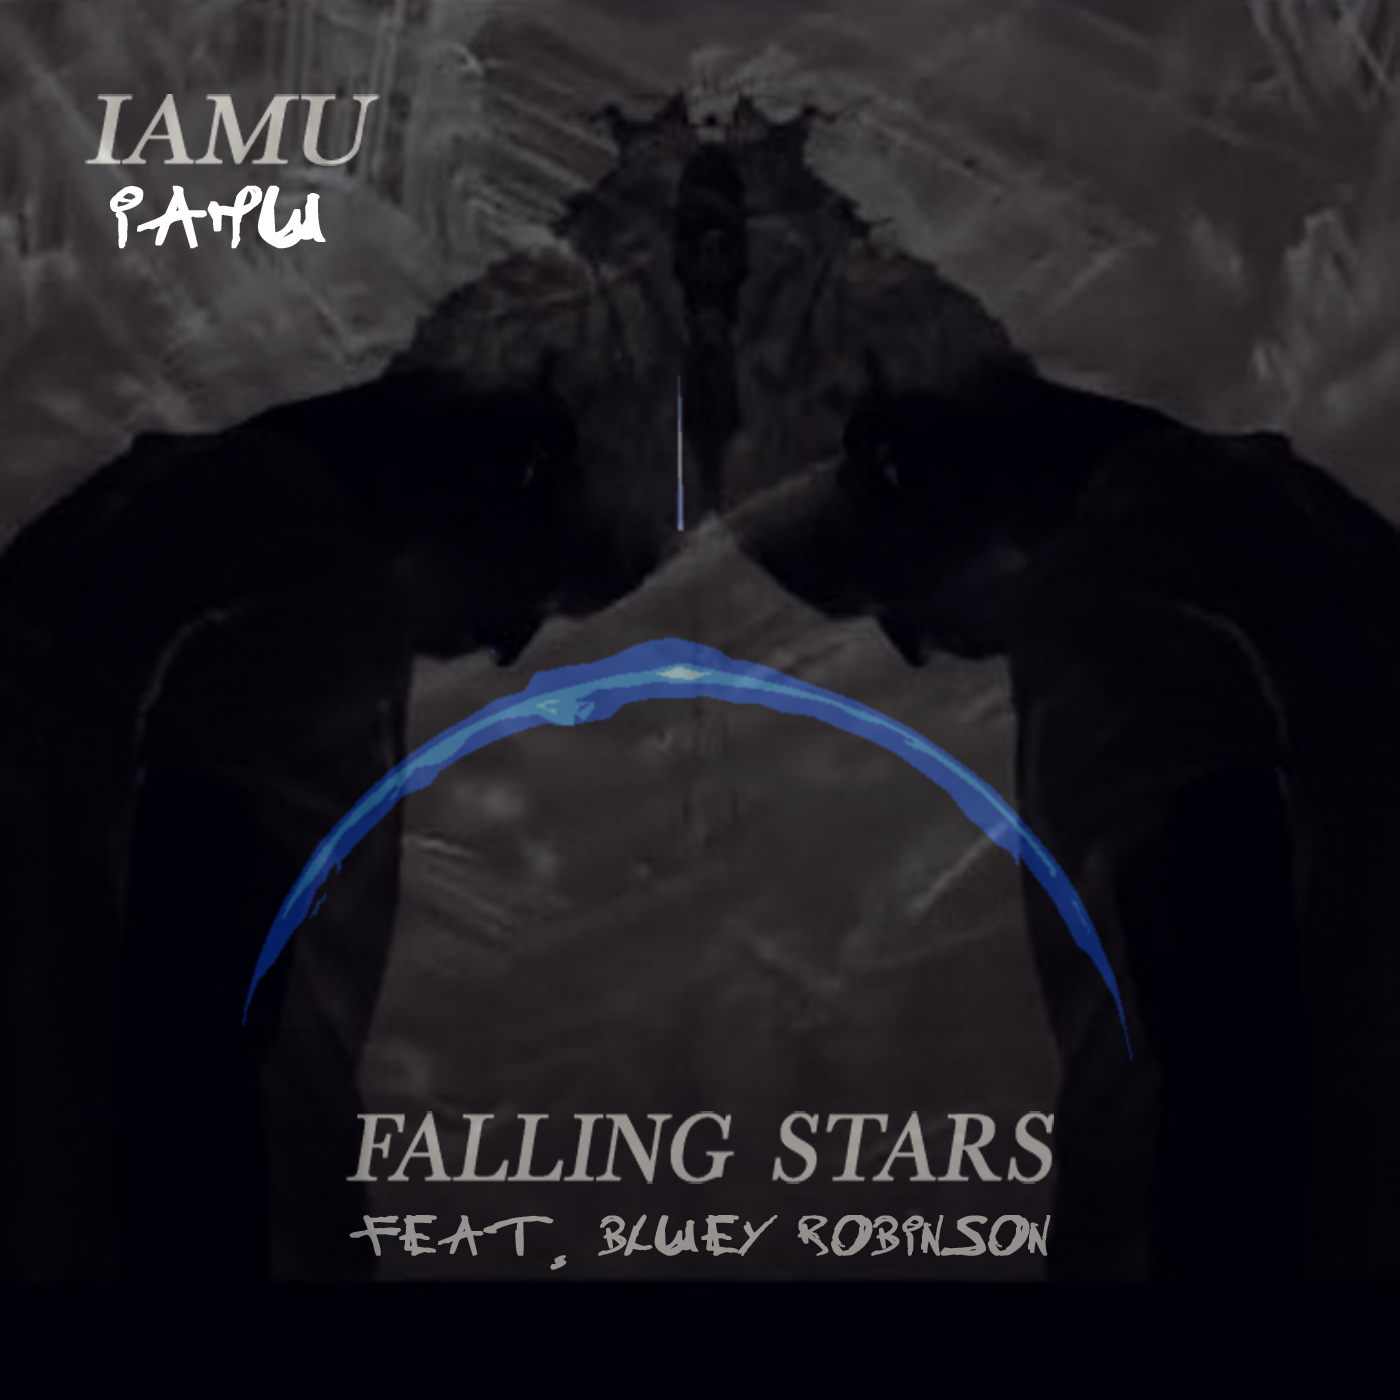 Am falling stars